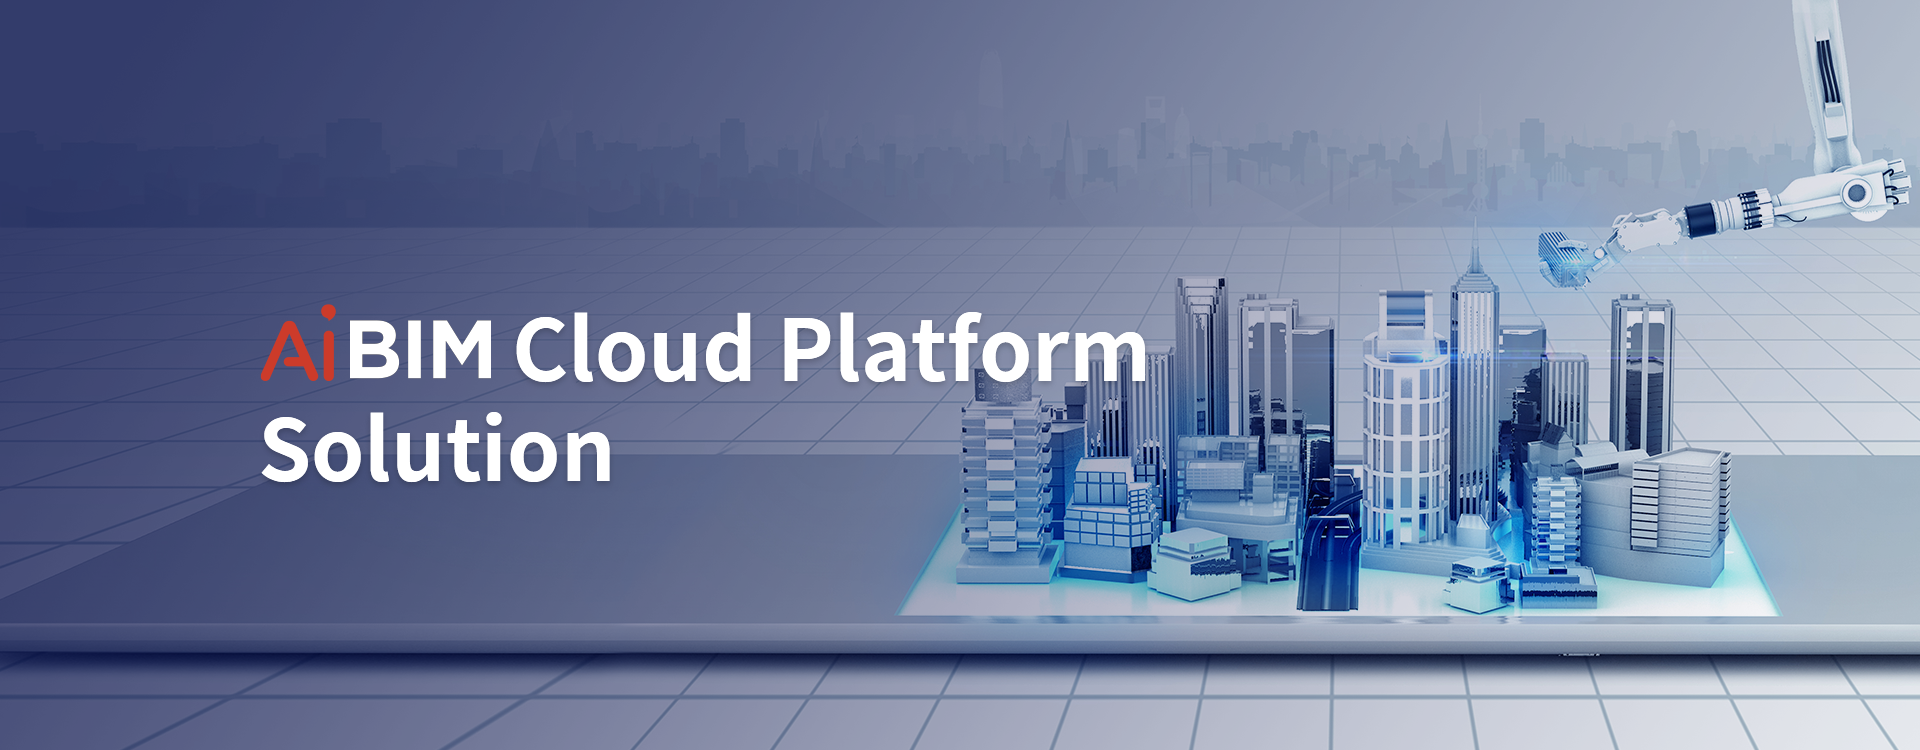 AiBIM cloud platform